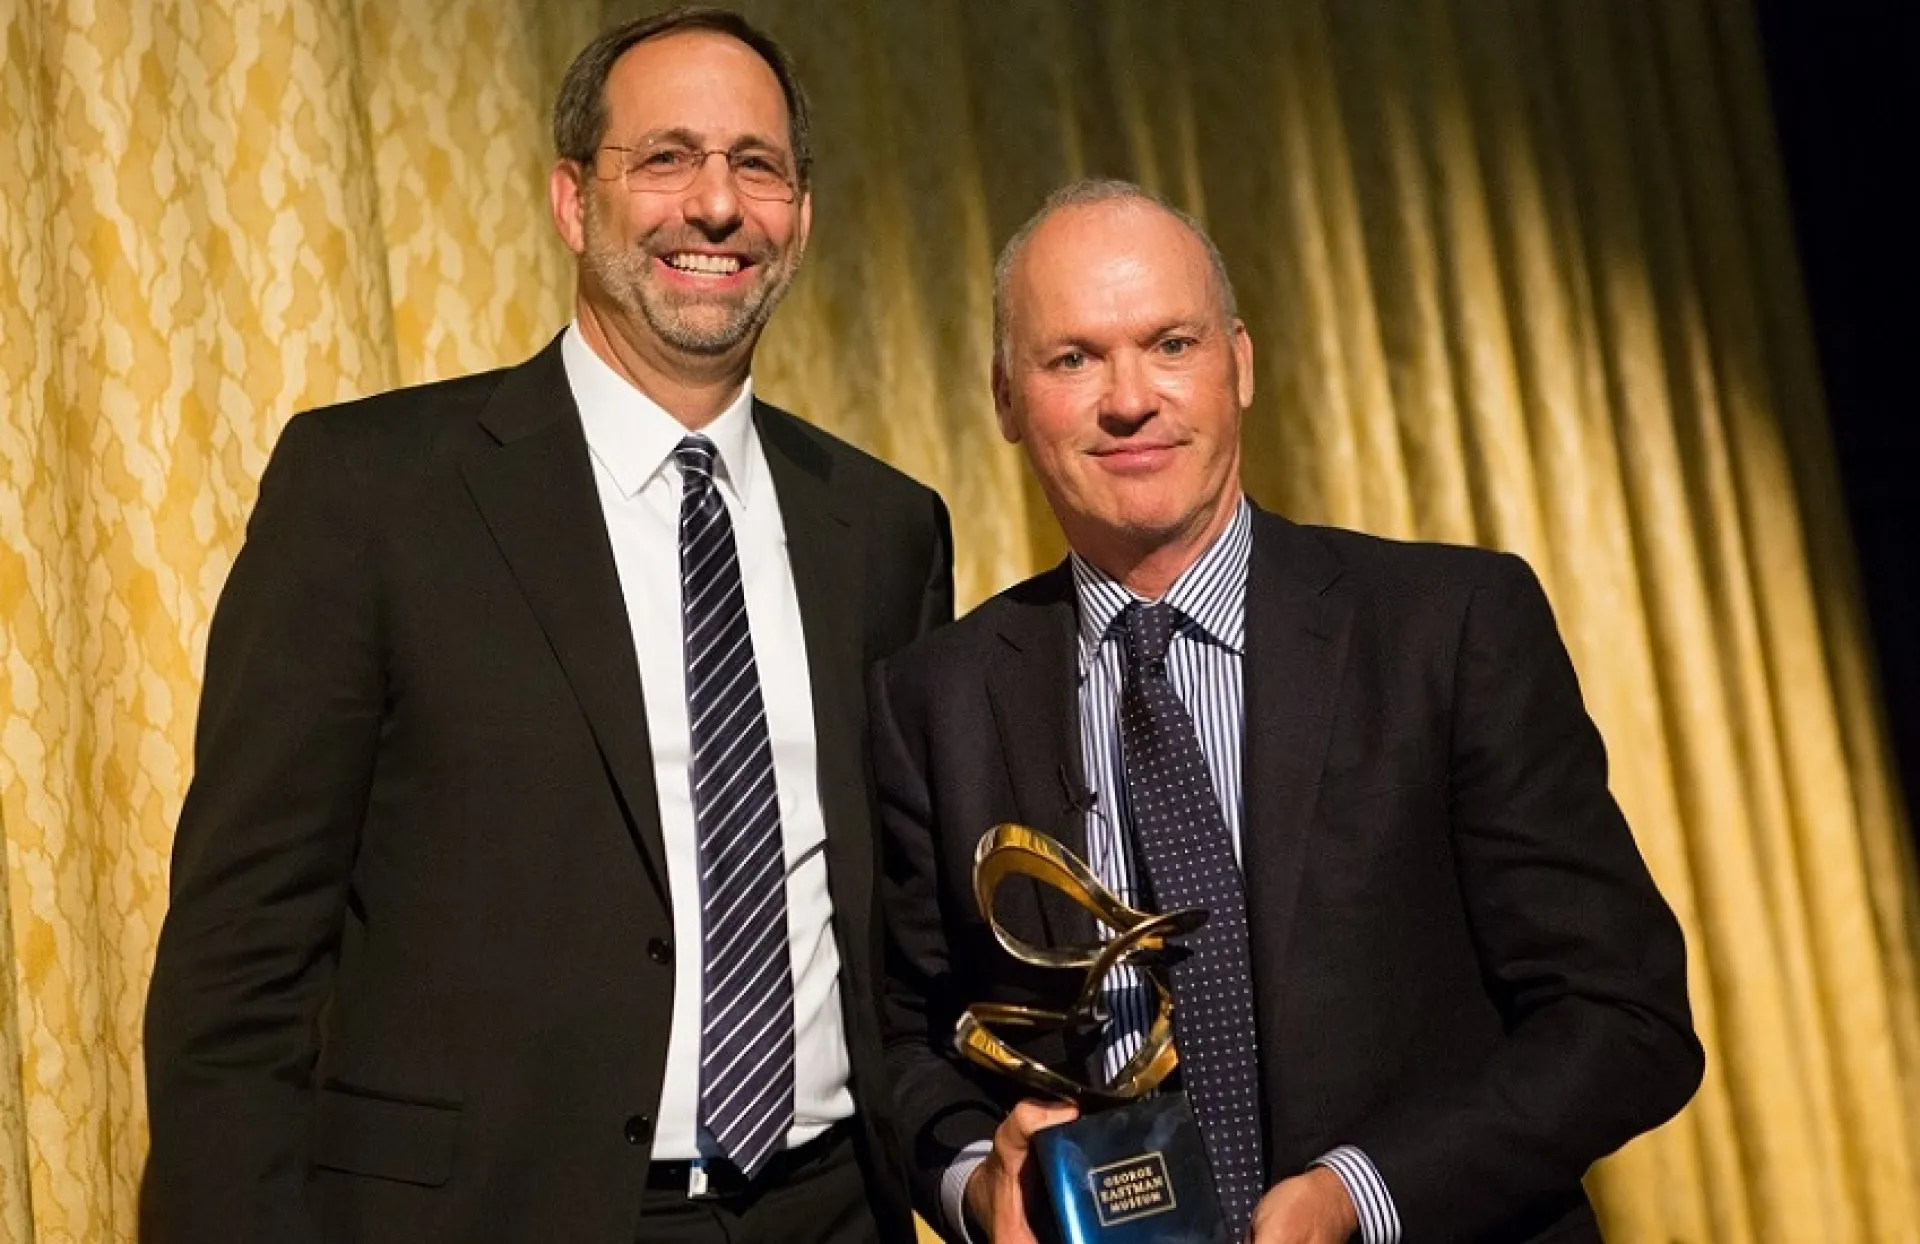 Michael Keaton, Eastman award honoree, and Steven Schwartz, board of trustee chair